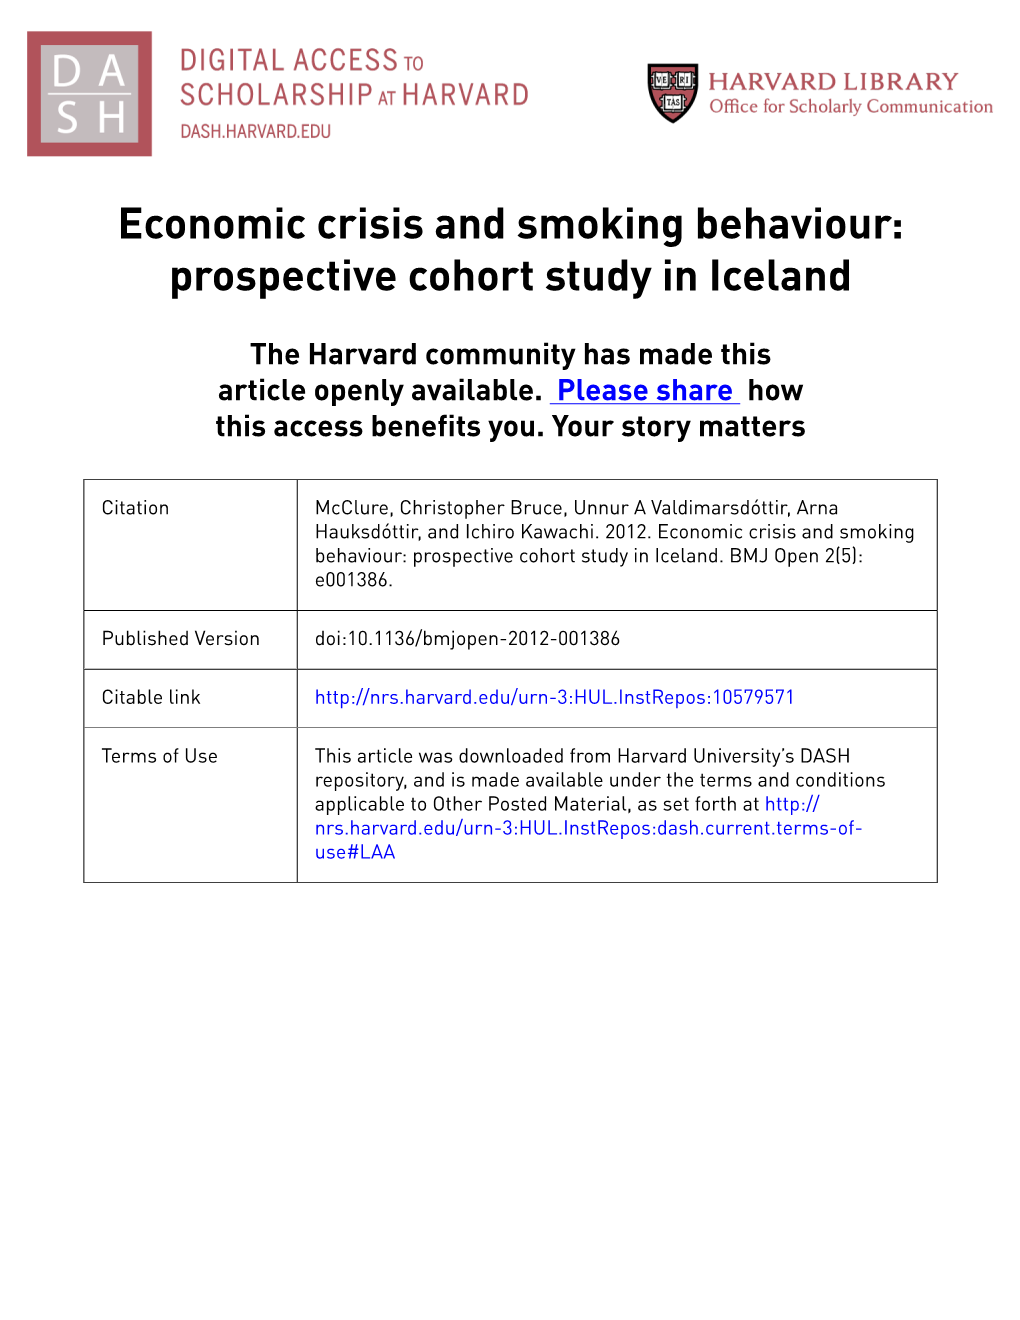 Economic Crisis and Smoking Behaviour: Prospective Cohort Study in Iceland